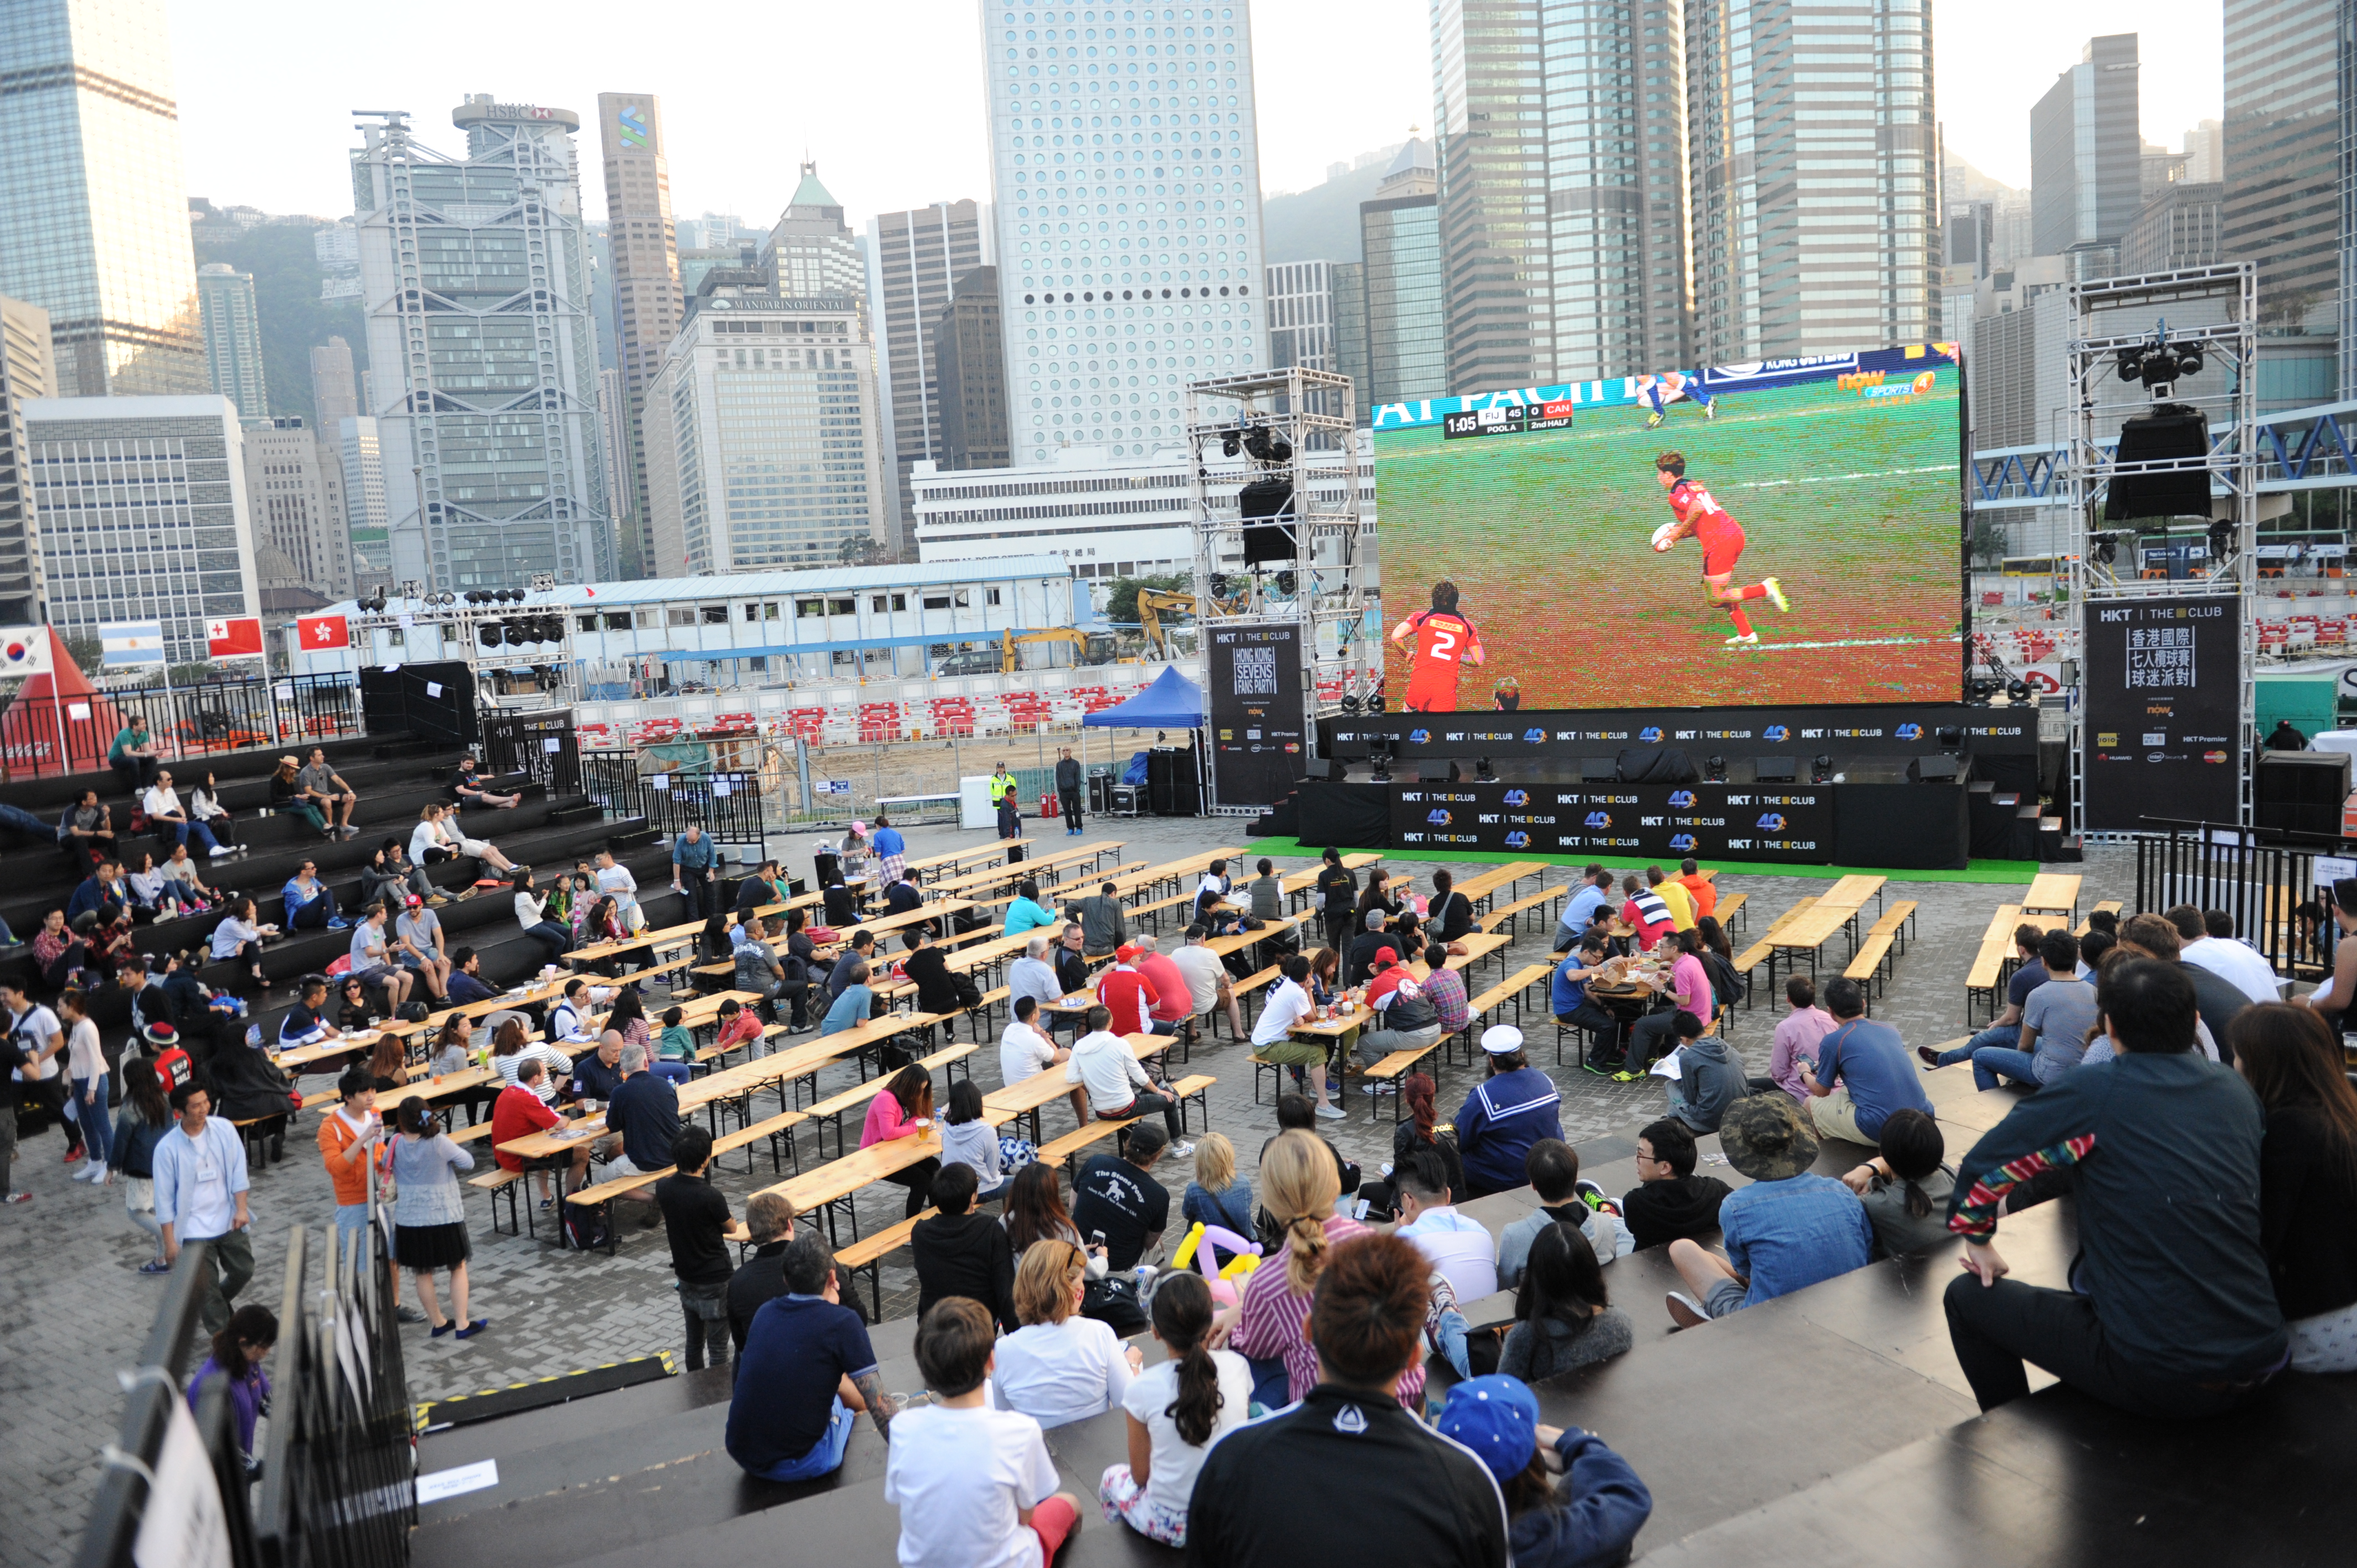 Event Management for HKT Rugby 7 2015